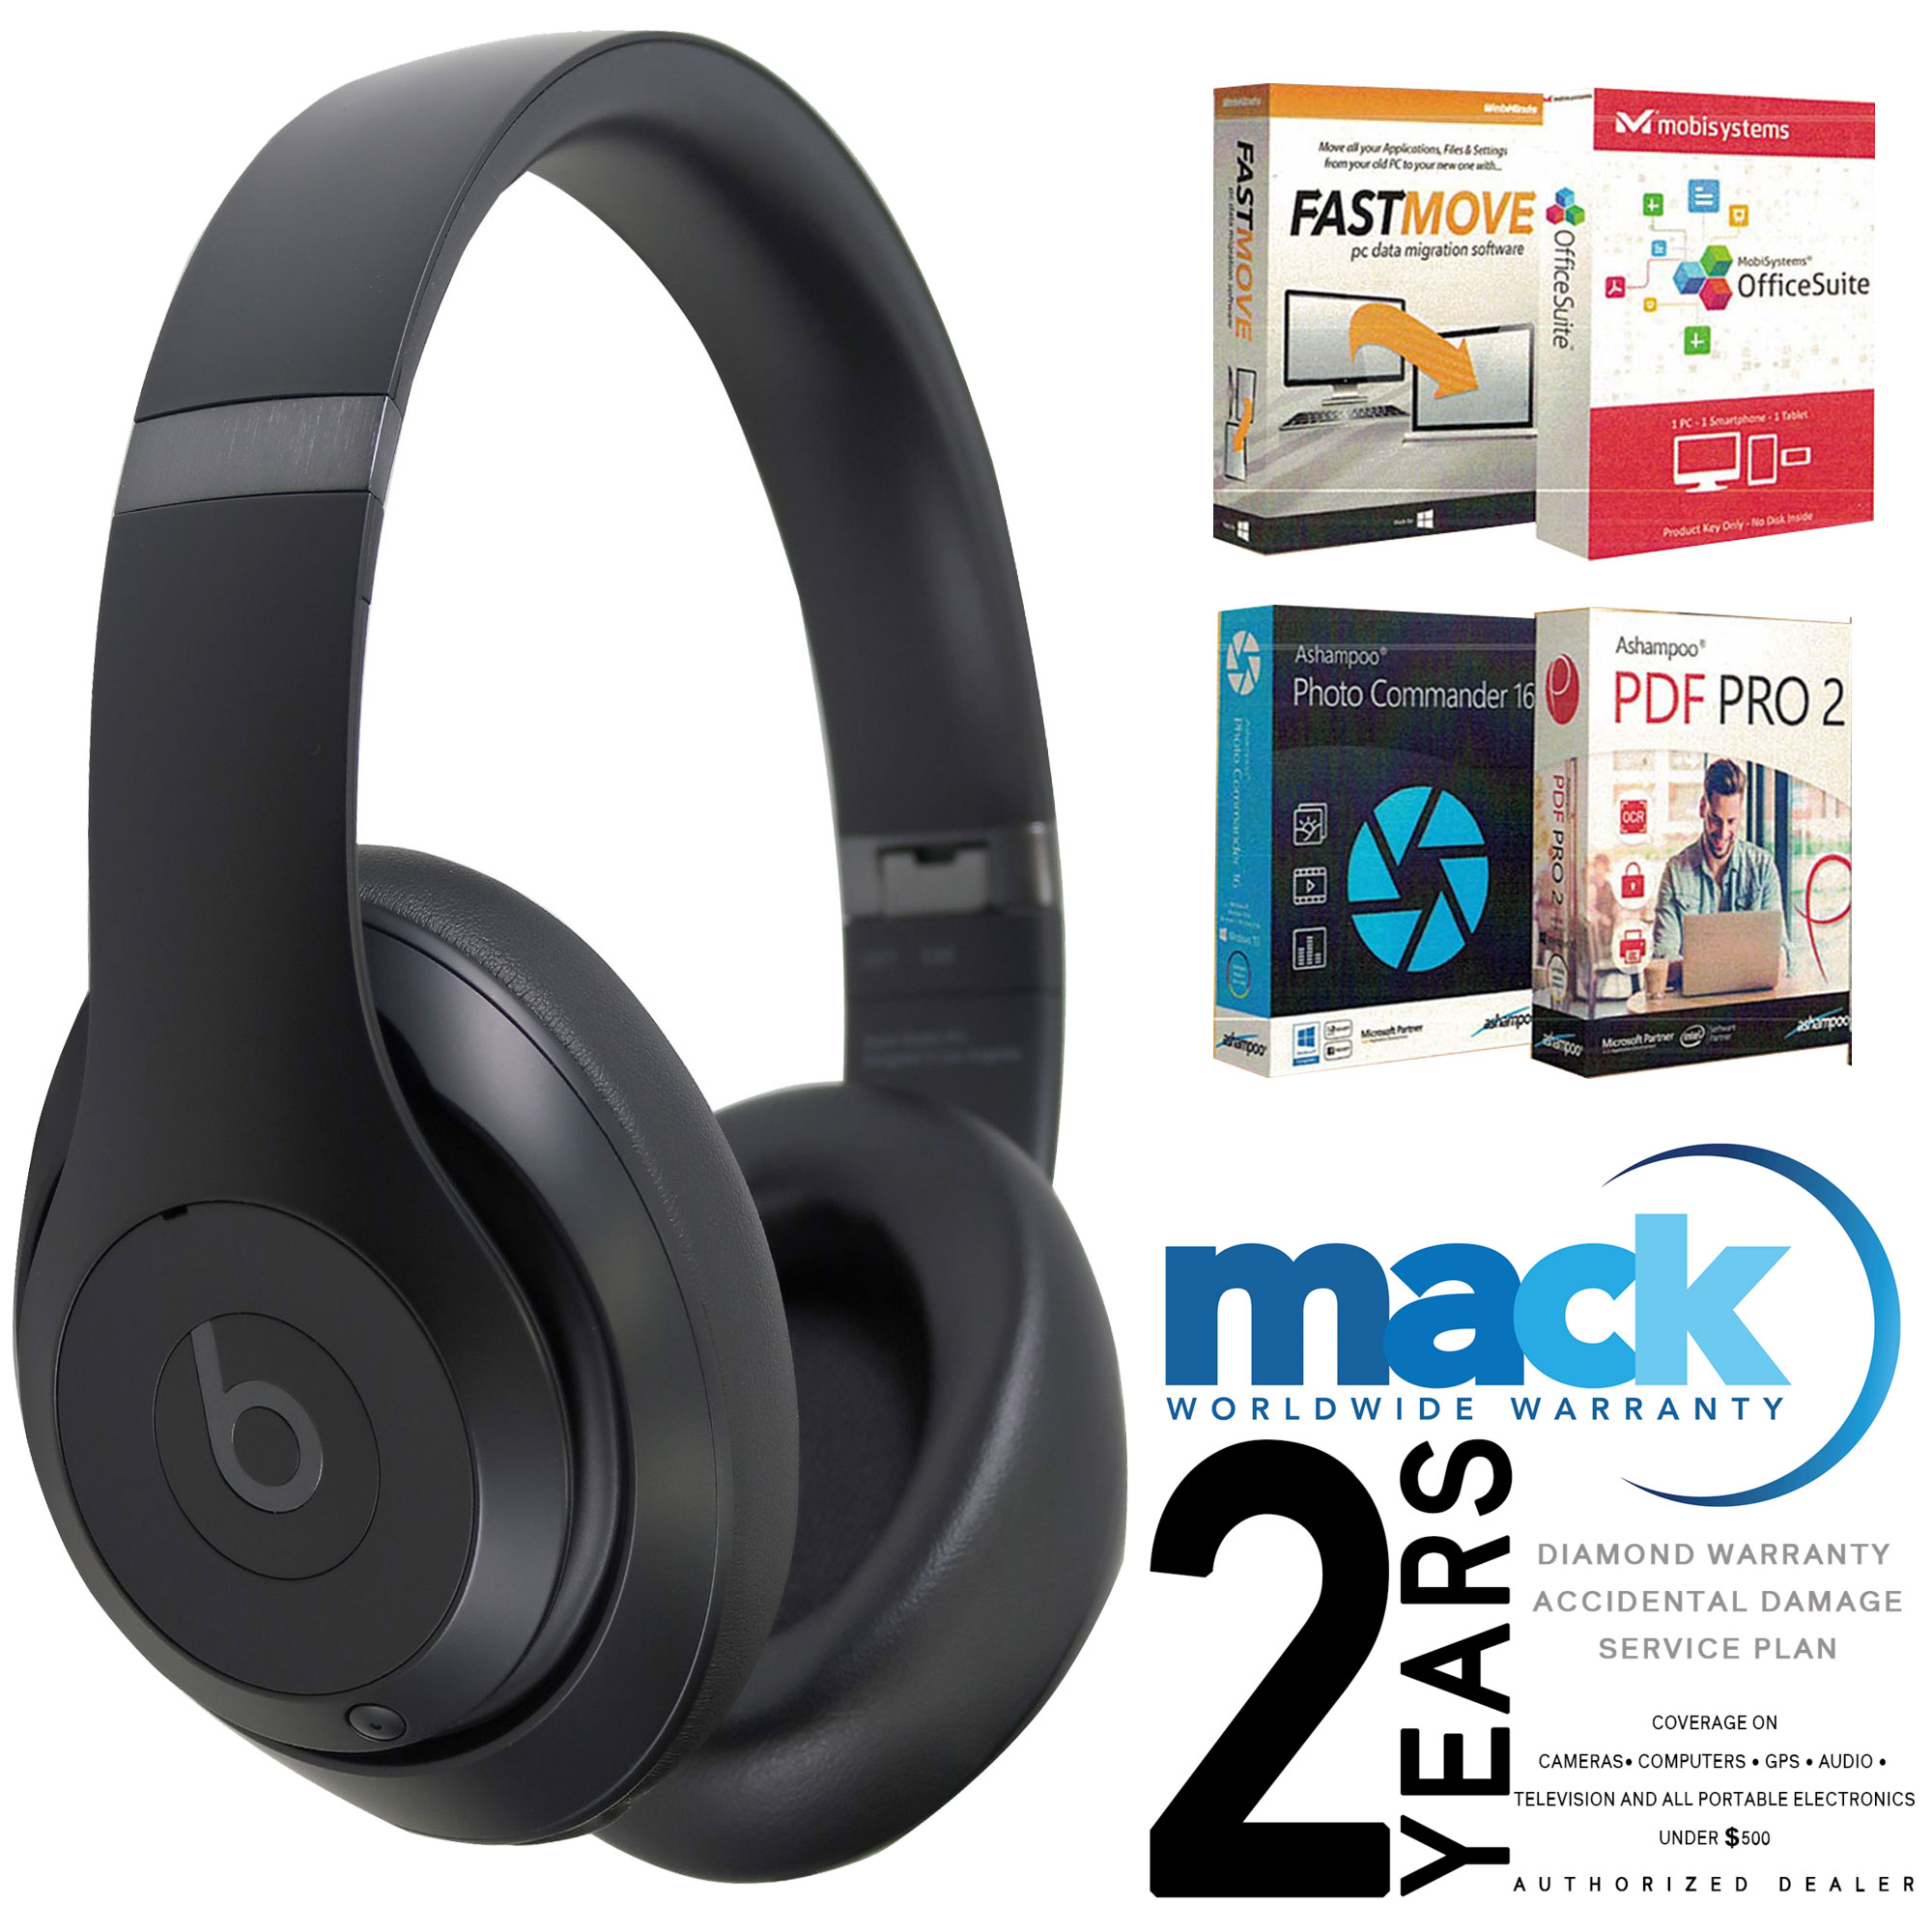 Beats Studio Pro Wireless Over-Ear Headphones Black with 2yr Diamond Mack Warranty and Software